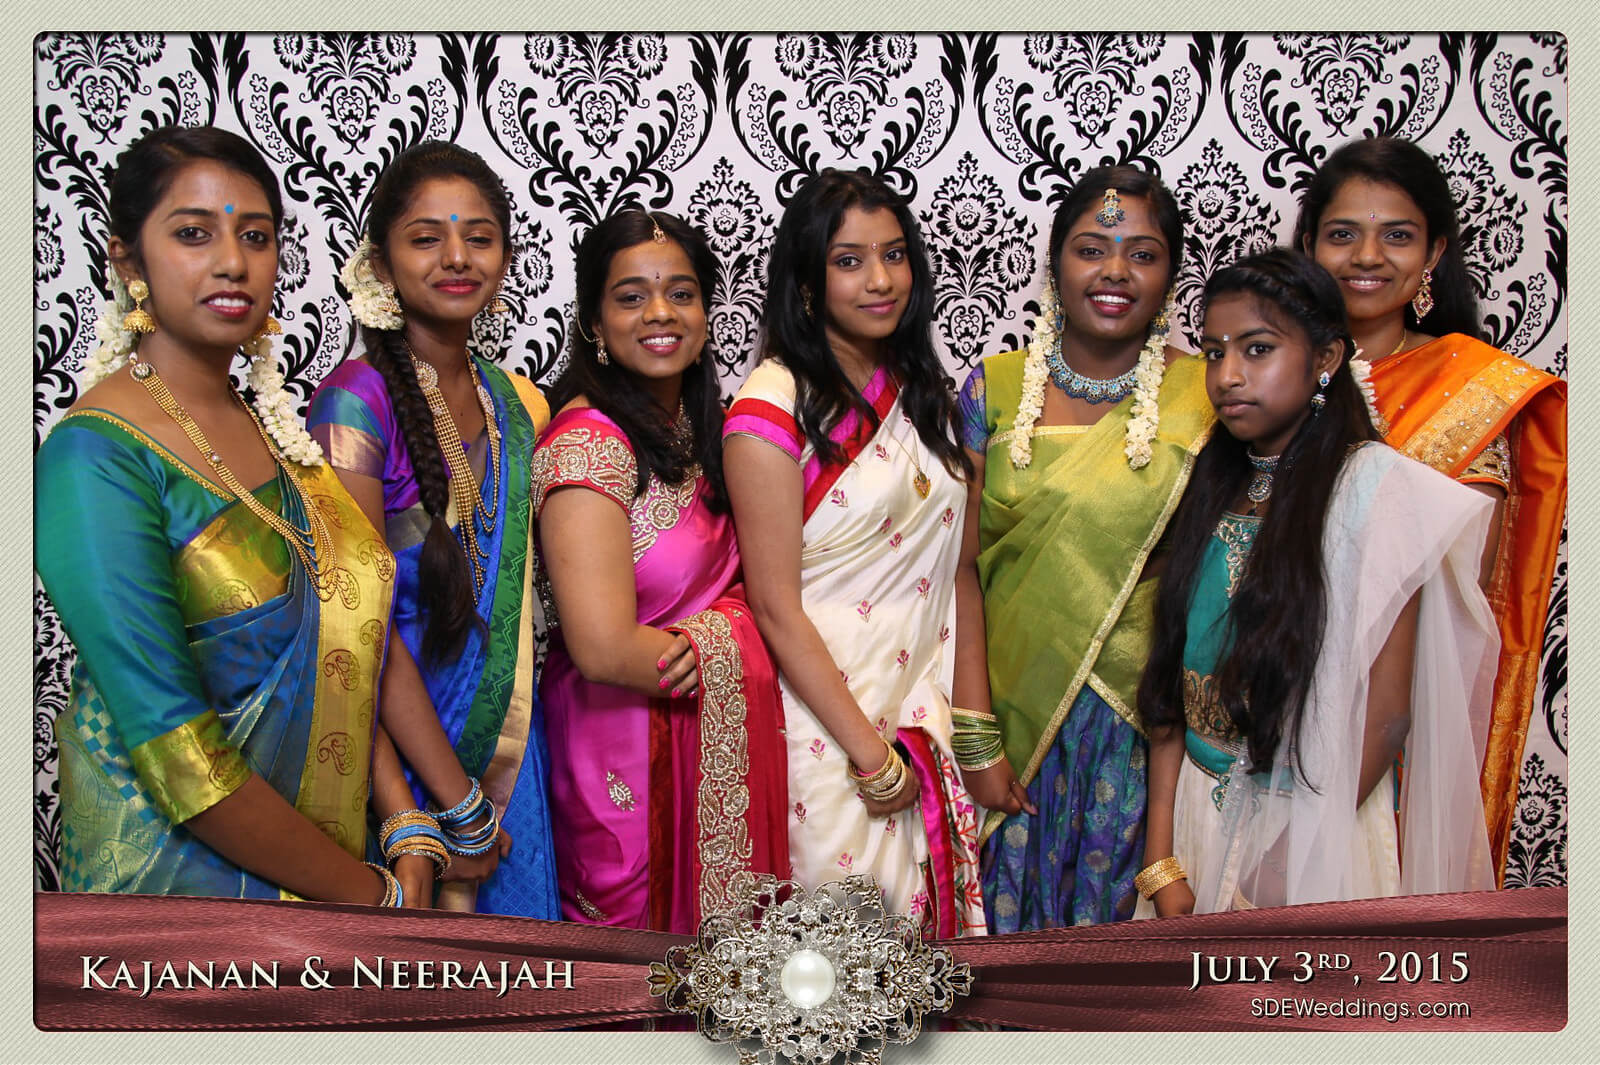 Toronto Scarborough Convention Centre Hindu Wedding Photo Booth Rental 1